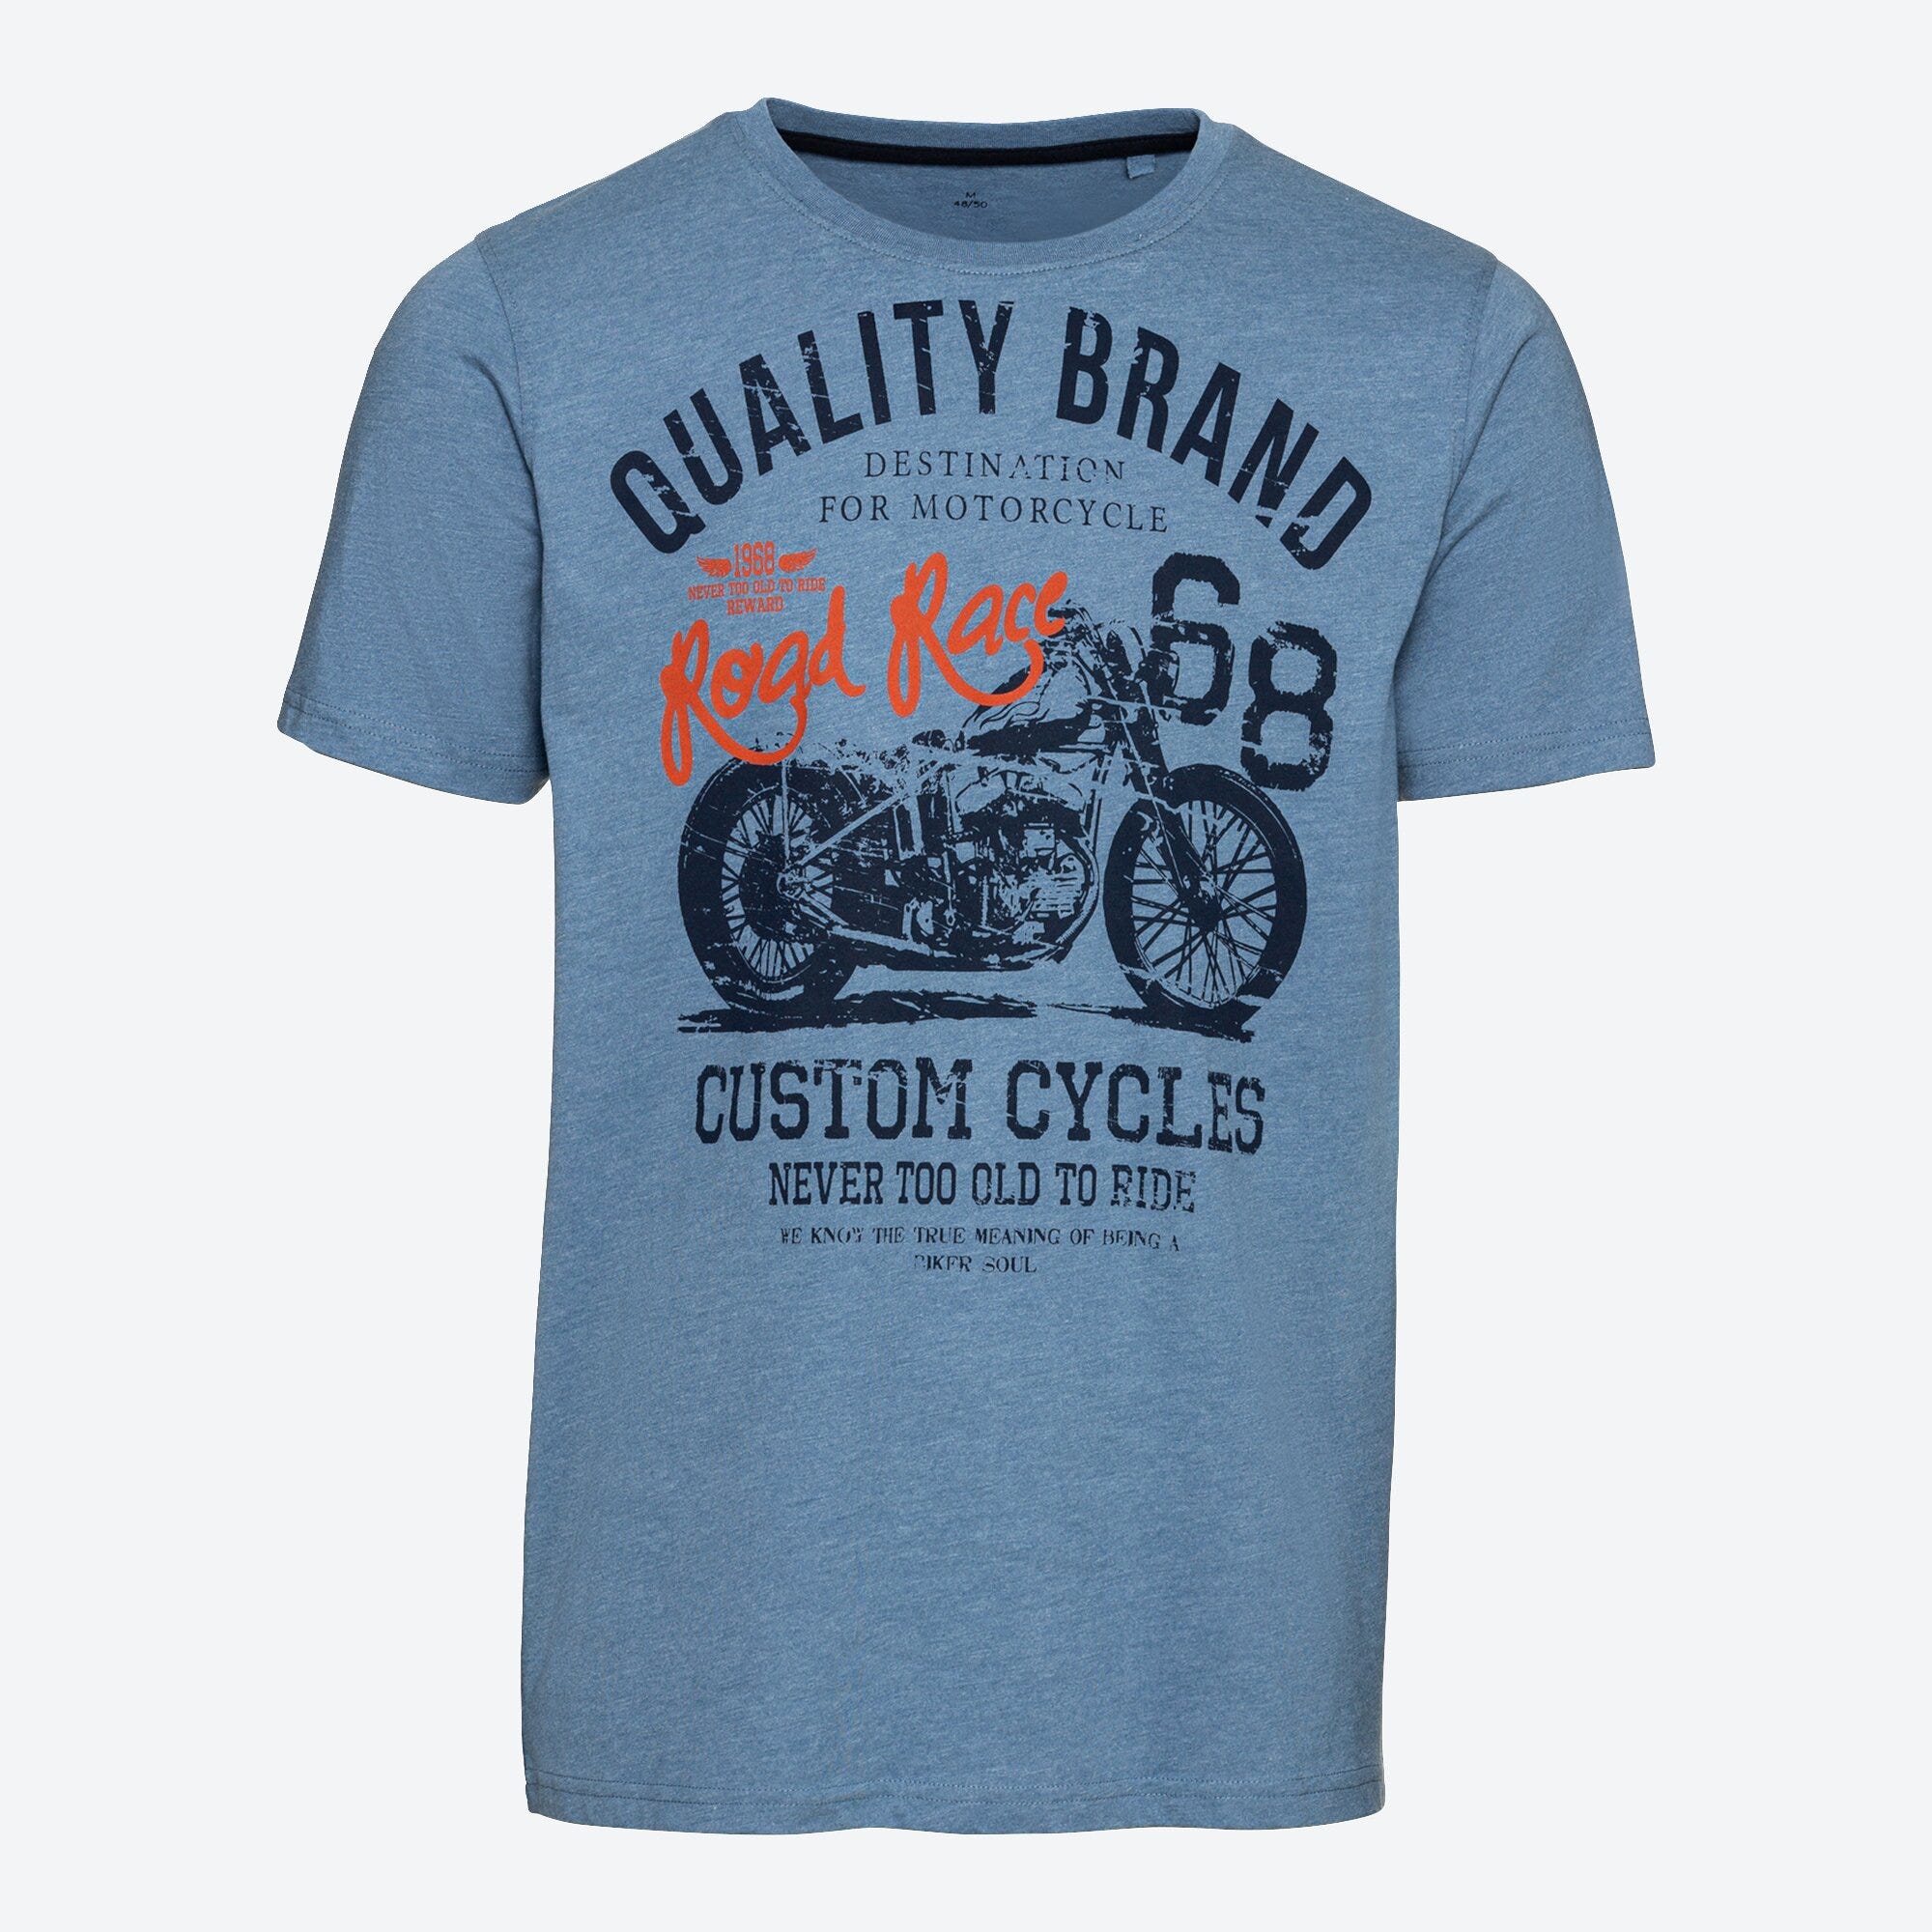 Herren-T-Shirt mit Motorrad-Frontaufdruck